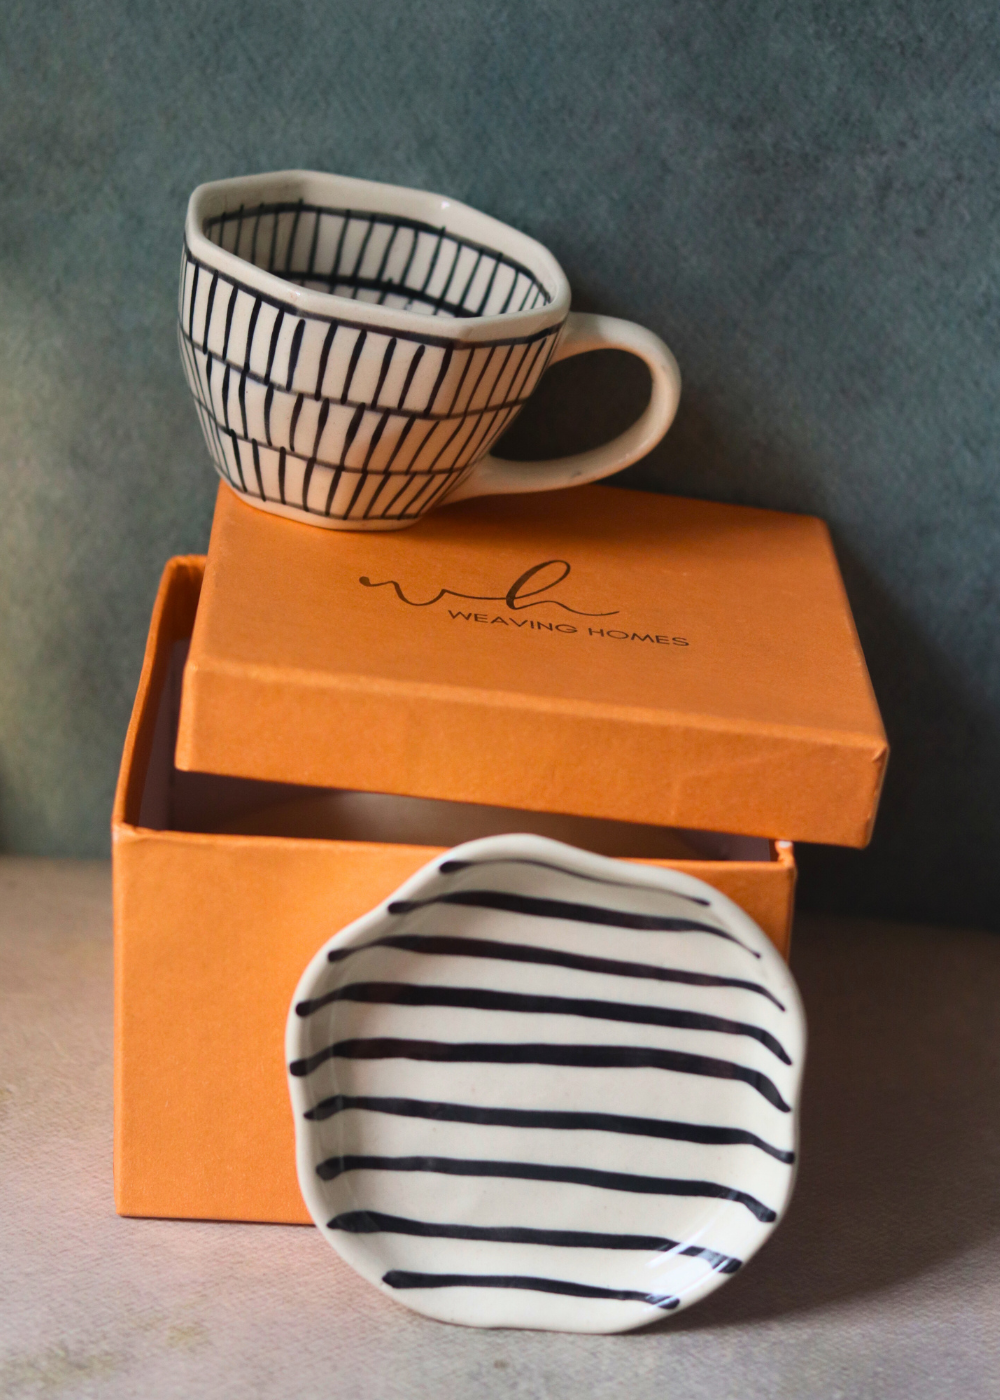 Stunning design handmade coffee mug & dessert plate with box